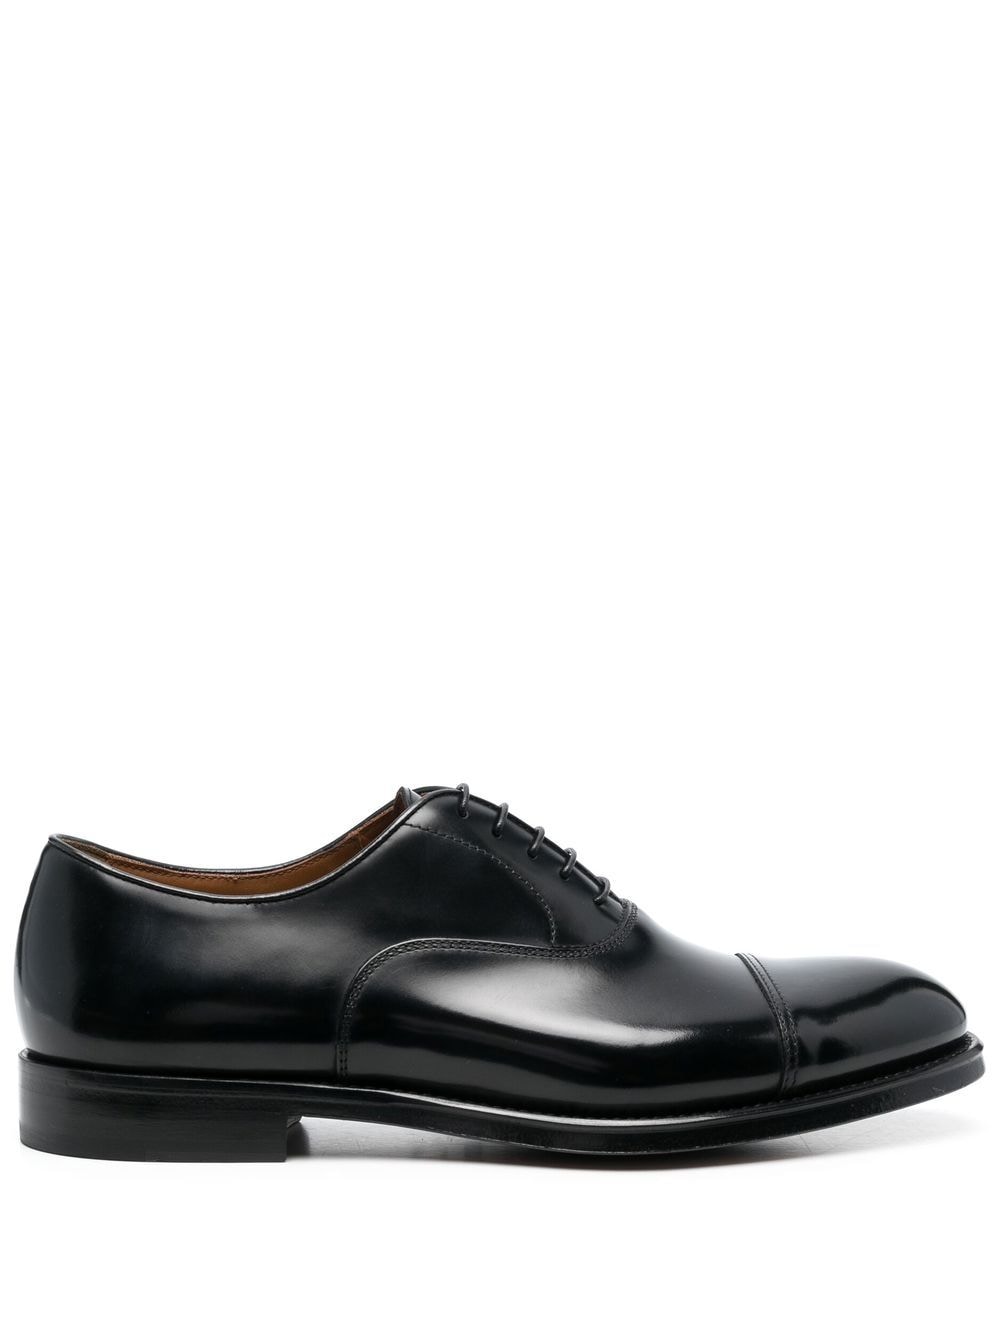 Doucal's cuban heel formal derby shoes - Black von Doucal's